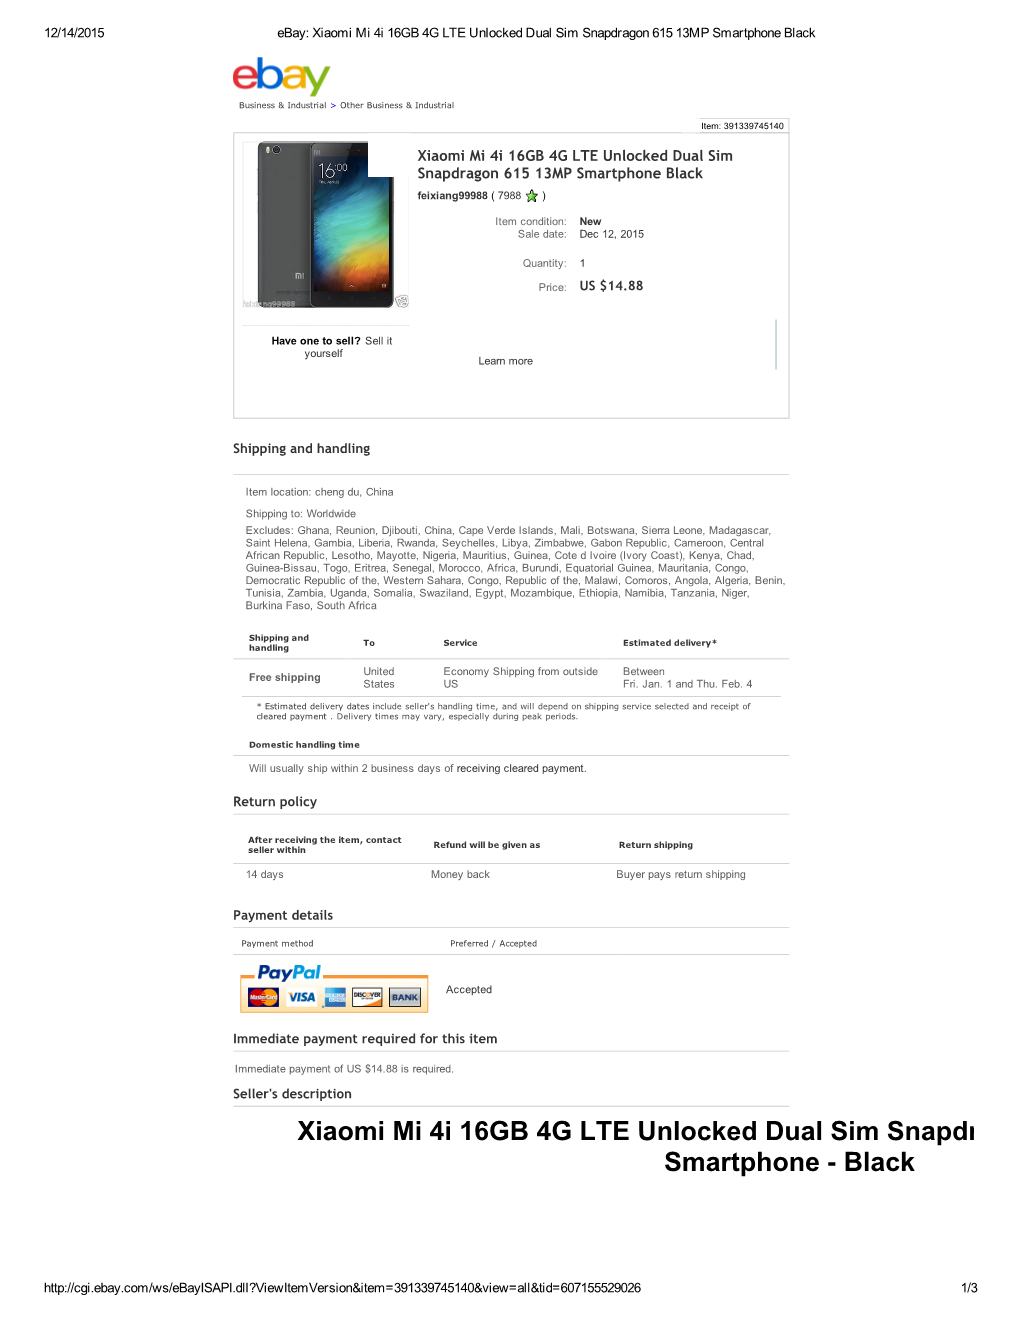 Xiaomi Mi 4I 16GB 4G LTE Unlocked Dual Sim Snapdragon 615 13MP Smartphone Black